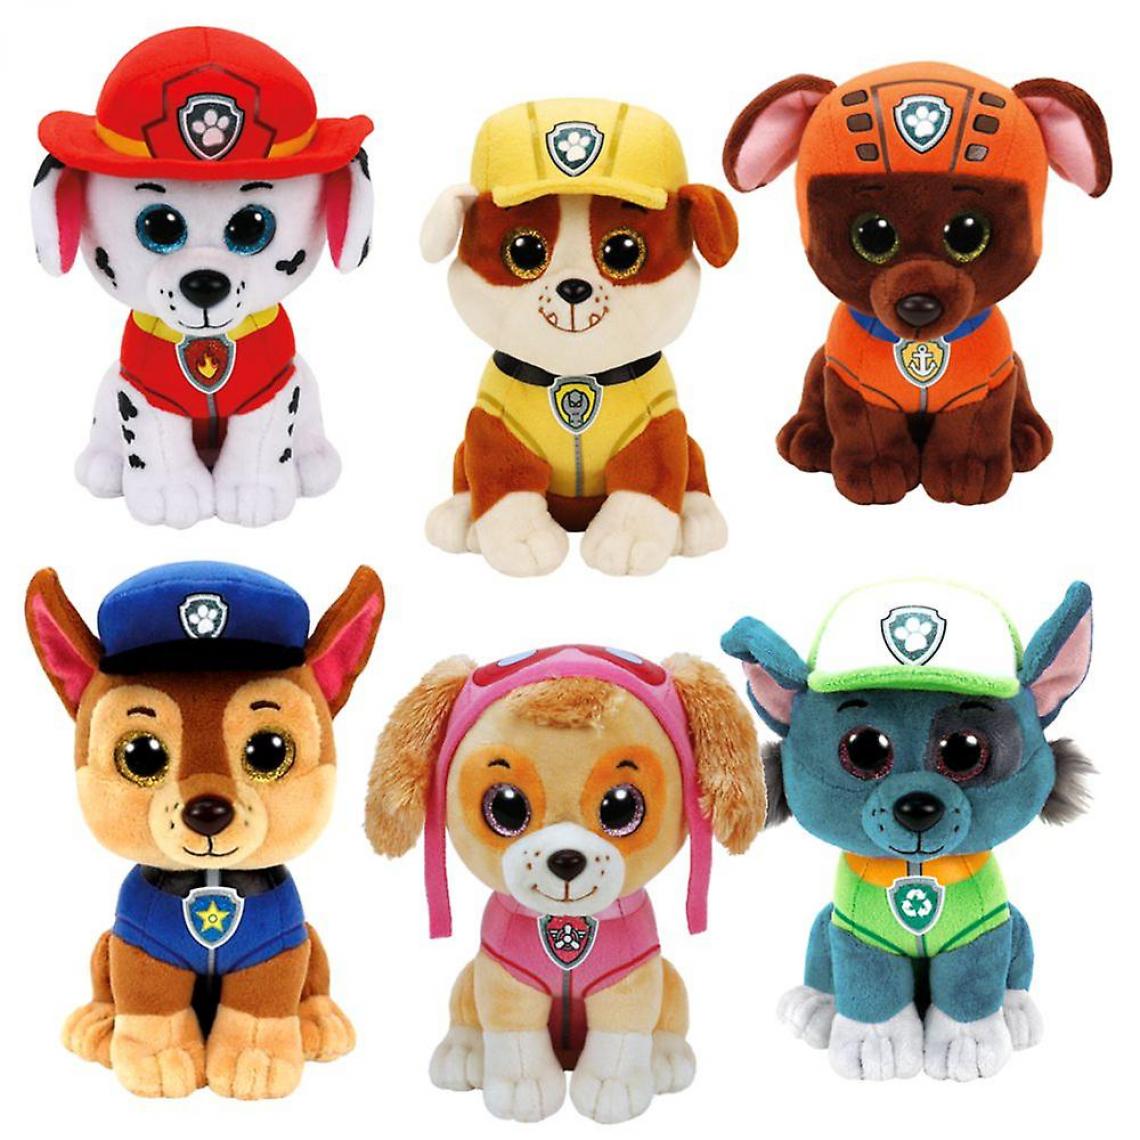 Universal - Ty Erbsenstation Glubschi Paw Patrol Marshall 15cm Dog Plush Toy(Rouge) - Animaux